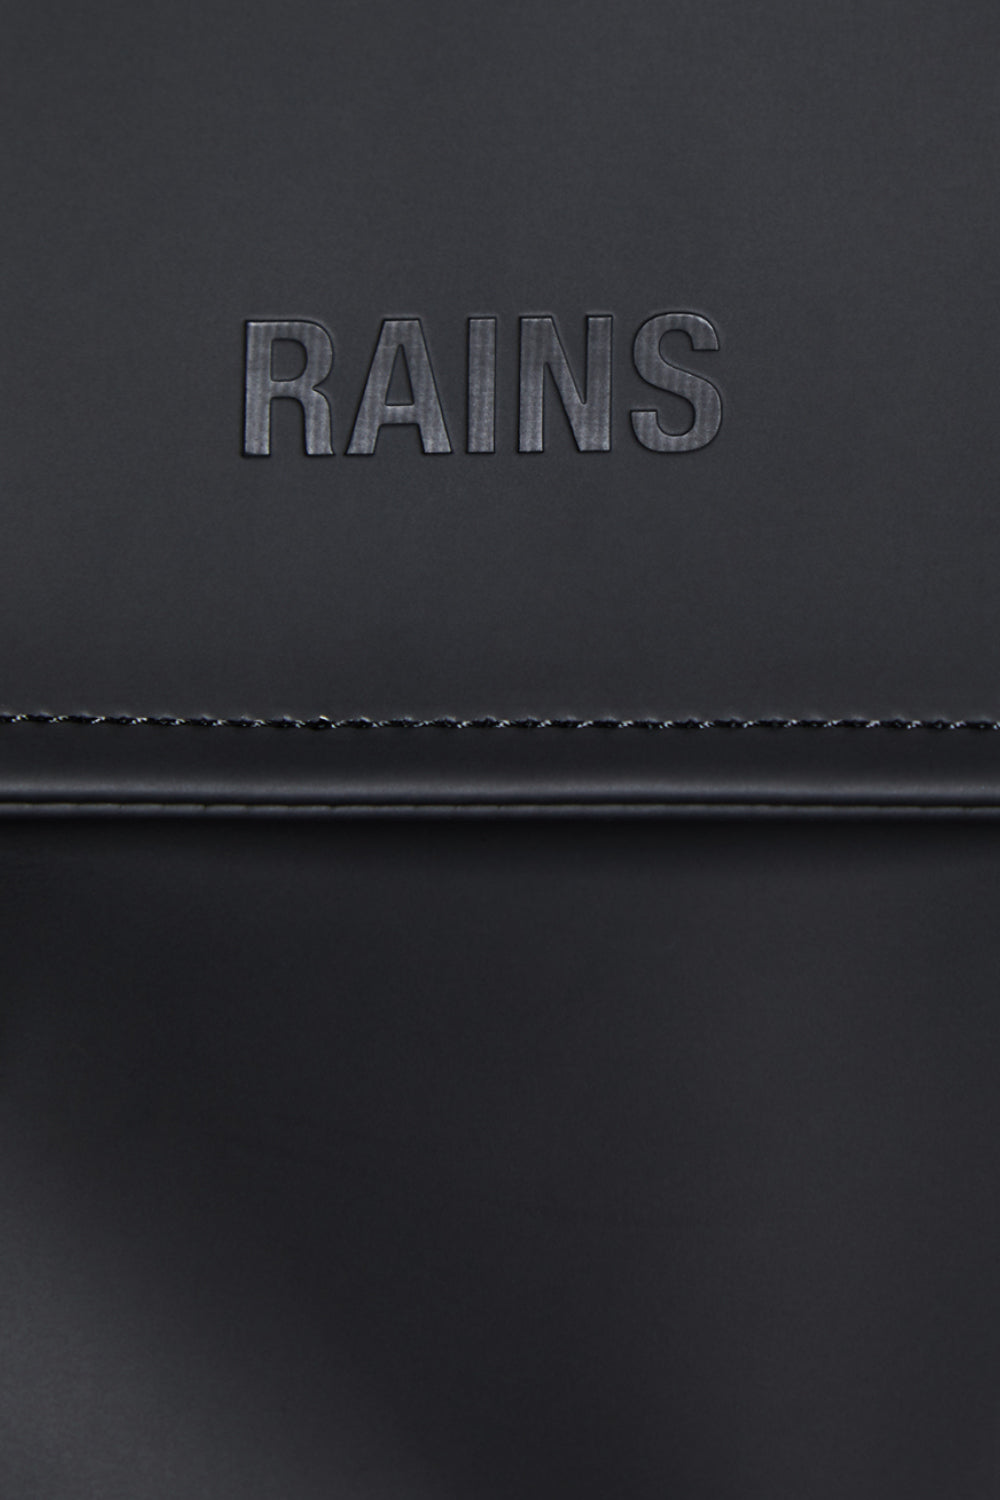 Rains MSN W3 Waterproof Messenger Bag (Black)